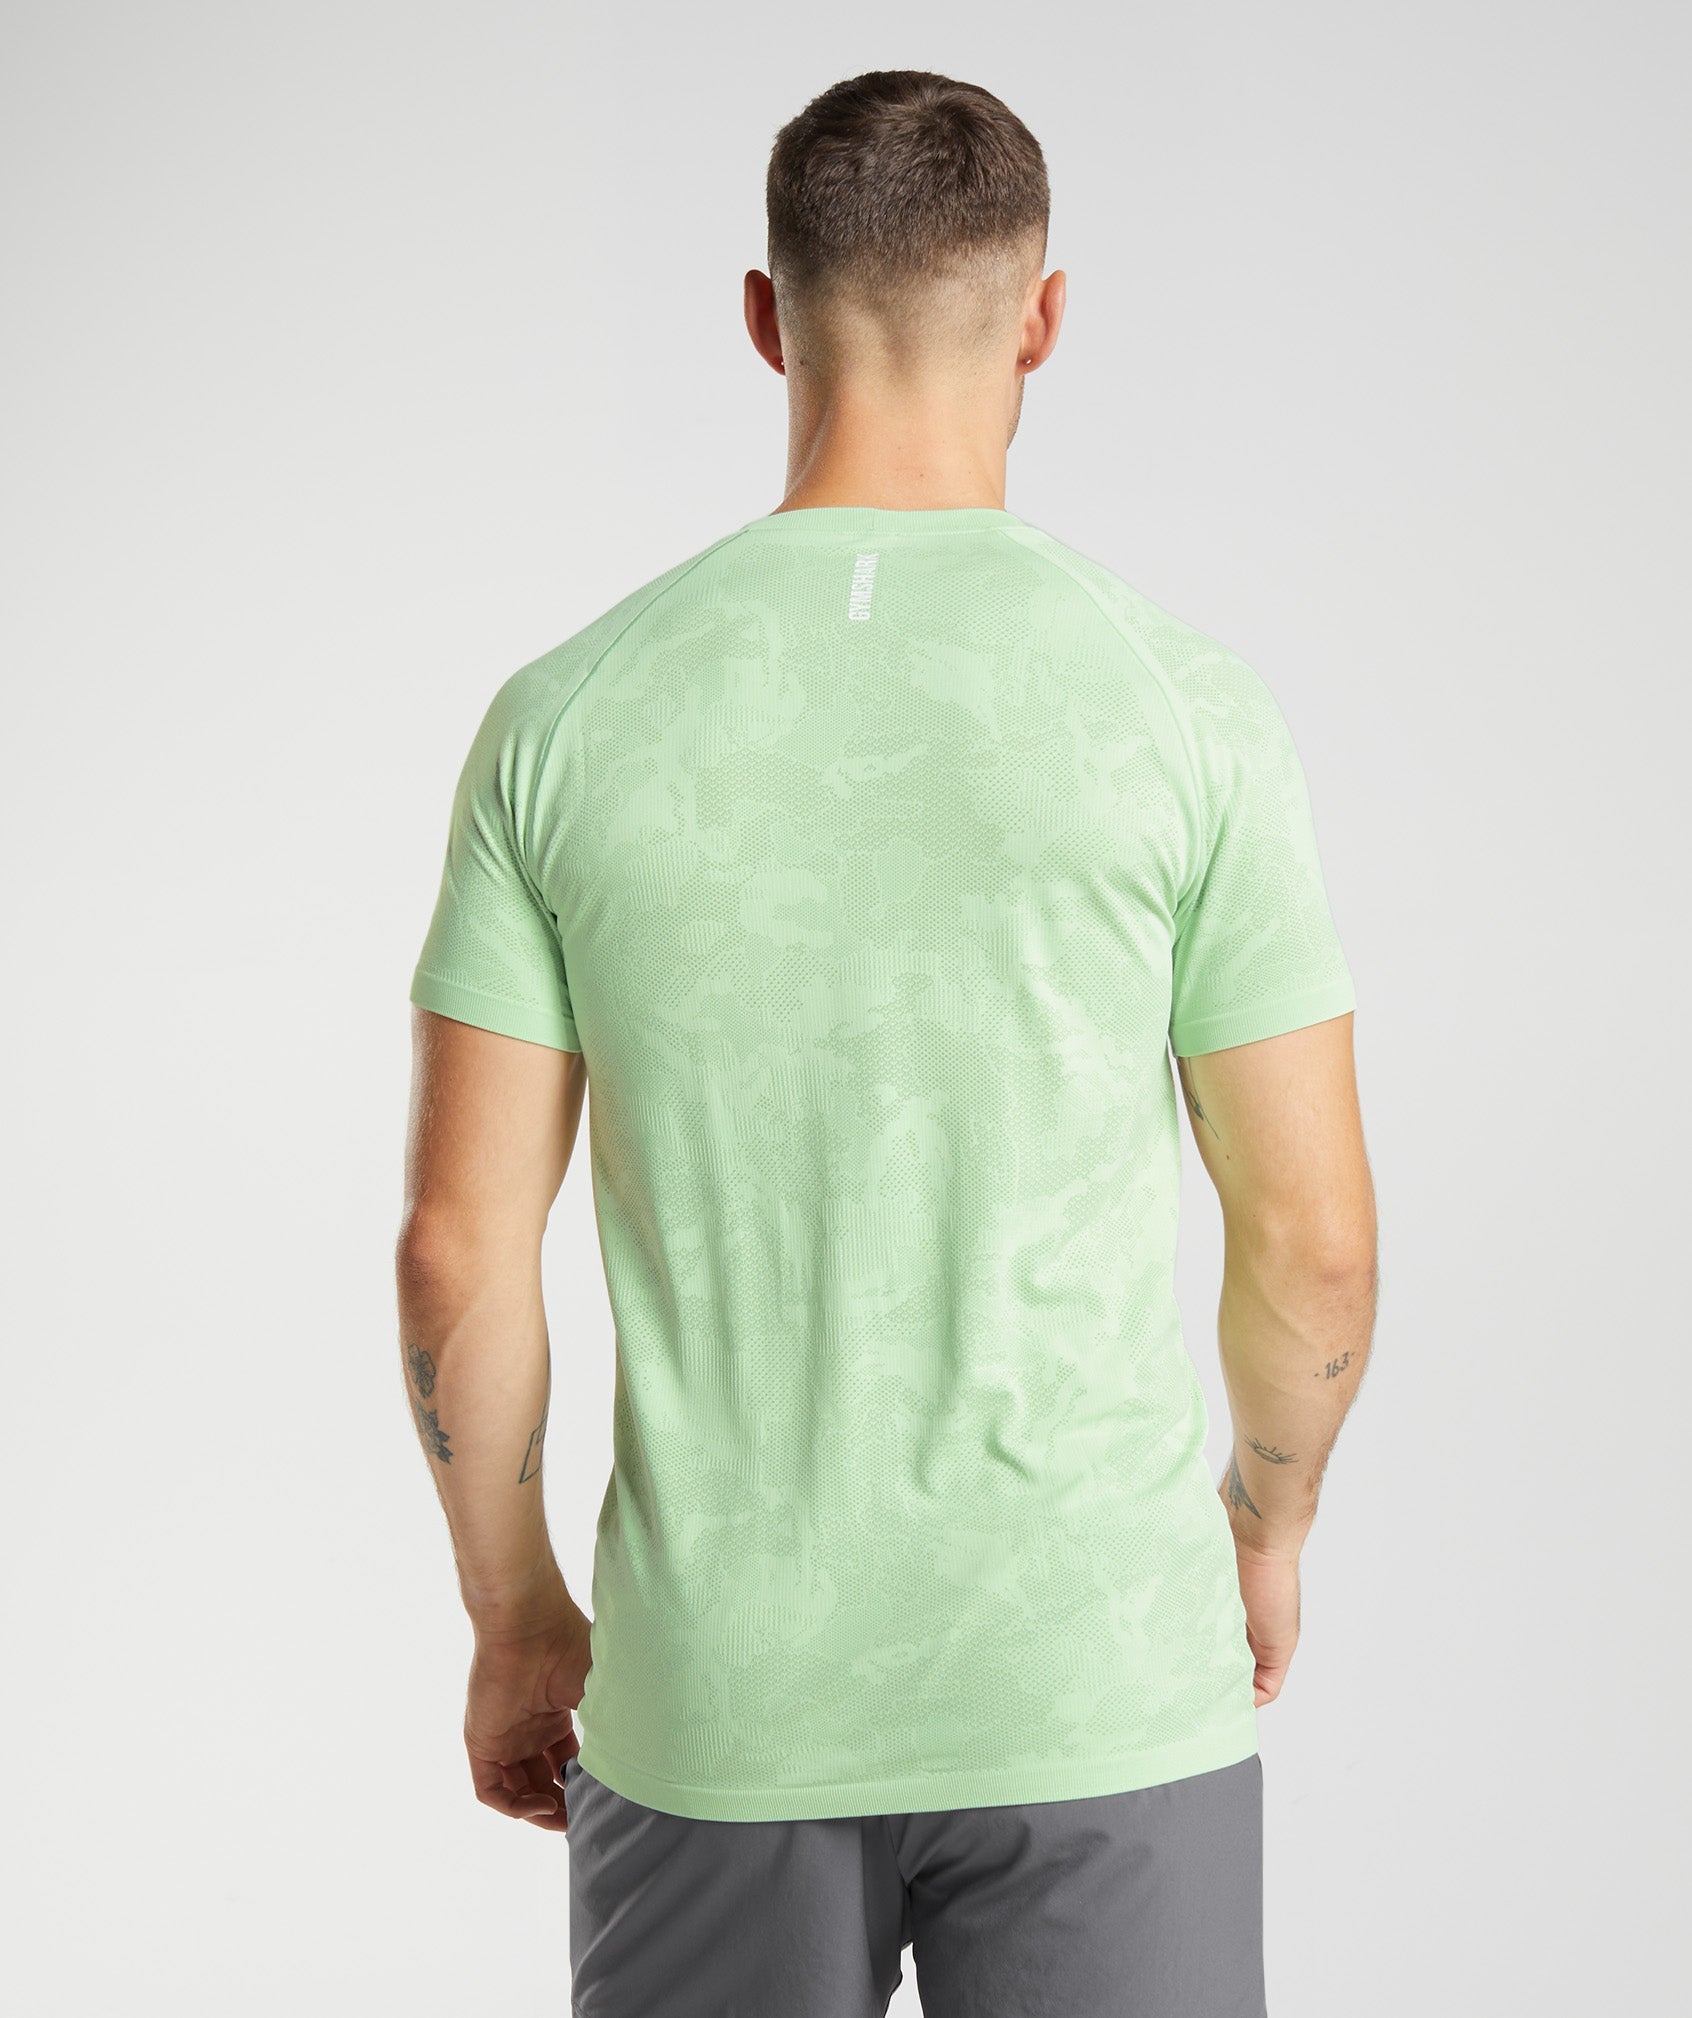 Geo Seamless T-Shirt in Aloe Green/Tea Green - view 2